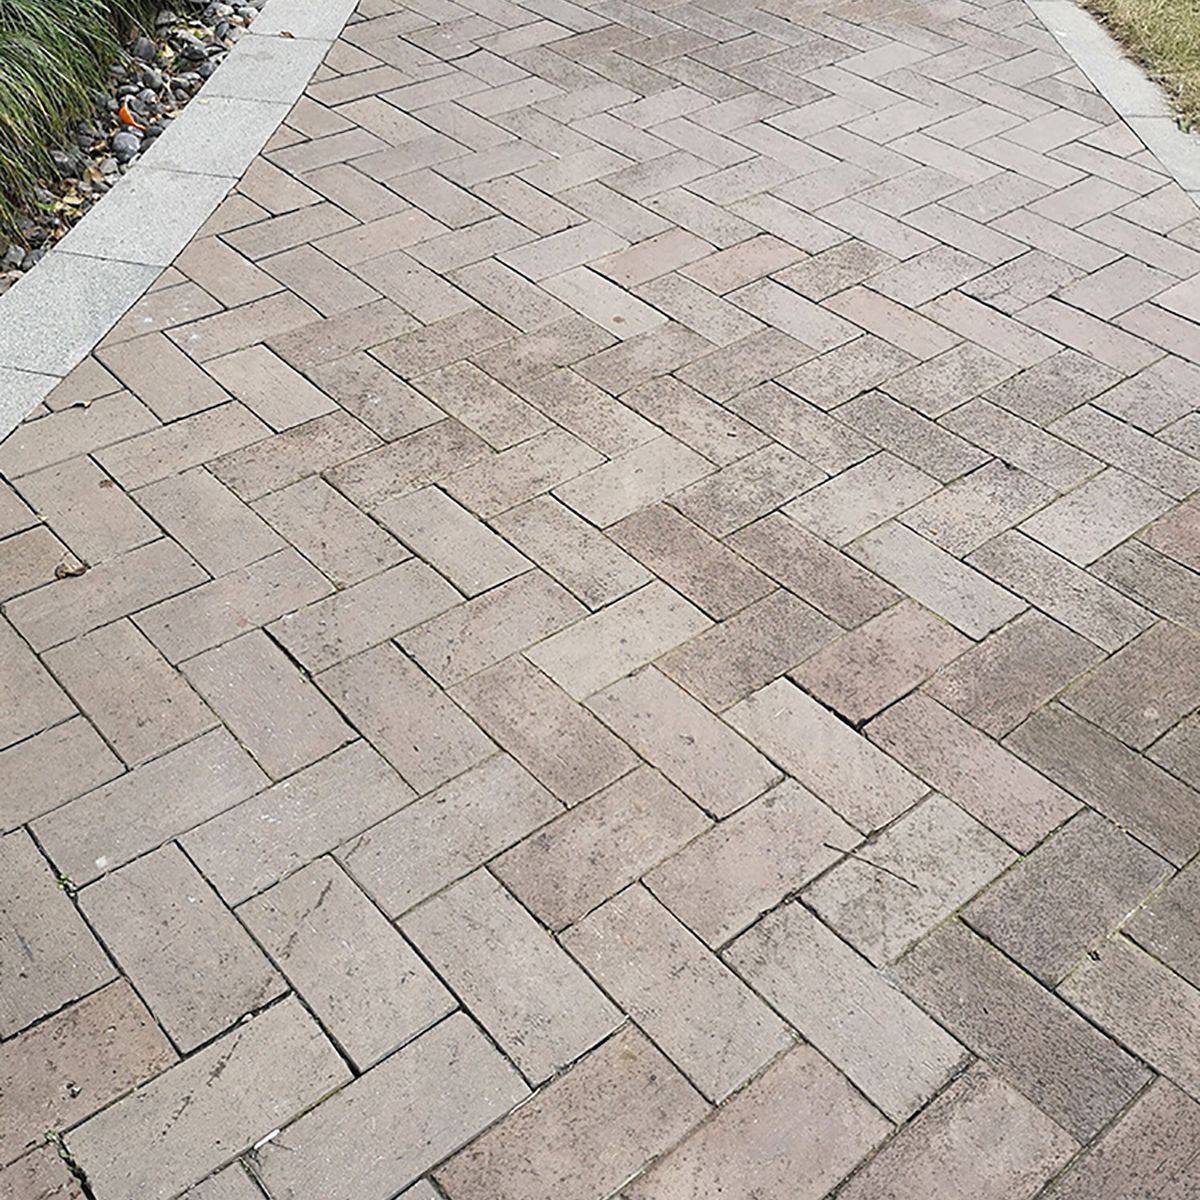 L-Cement-Brick-Stone-Road-Paver-Maker-Garden-Walk-Pavement-Mold-Path-DIY-Paving-1561531